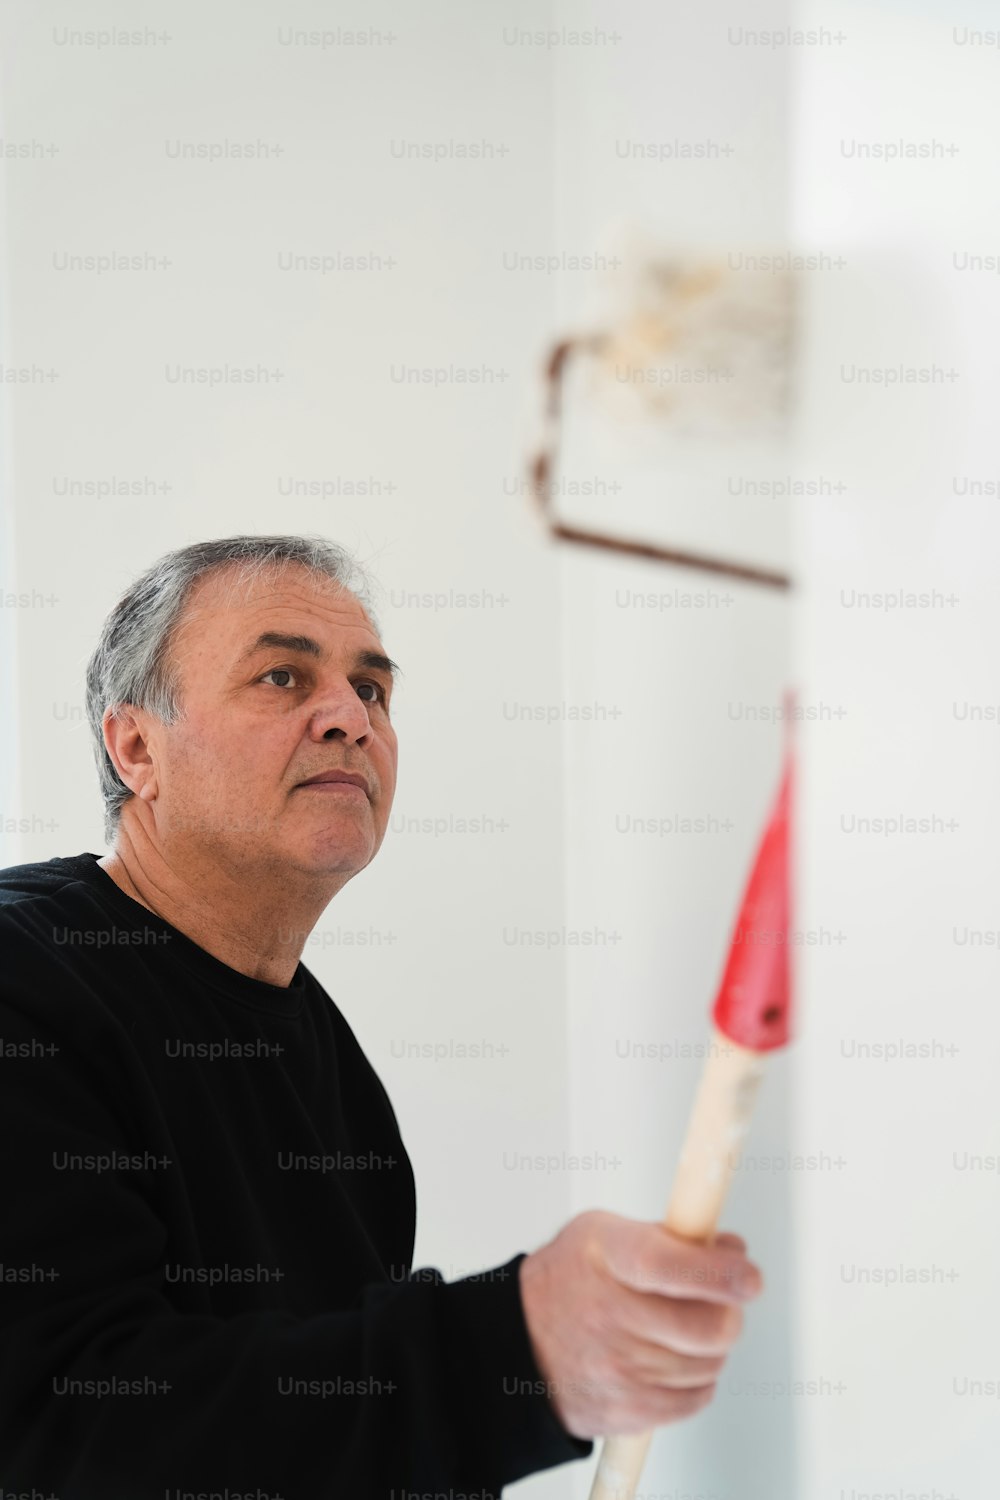 a man holding a baseball bat in a room